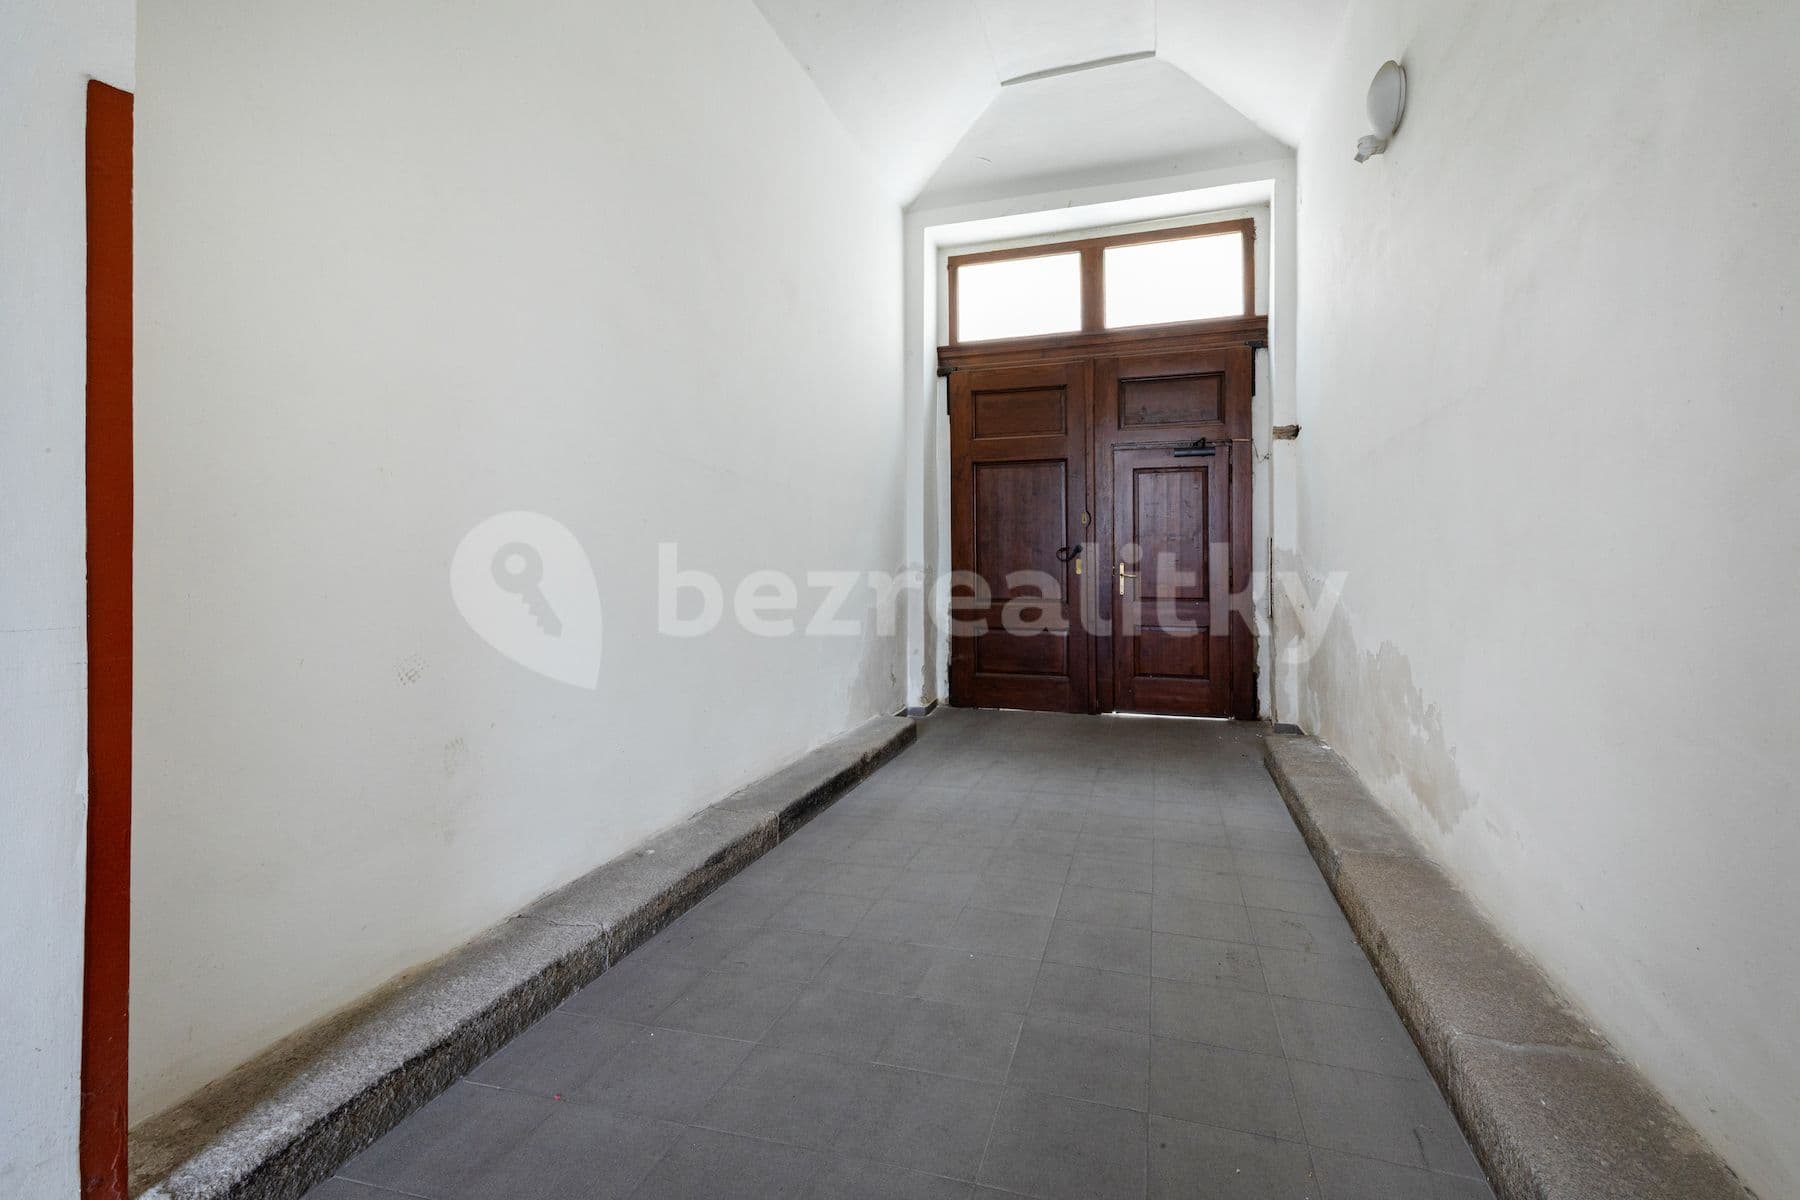 2 bedroom with open-plan kitchen flat for sale, 68 m², Neklanova, Prague, Prague